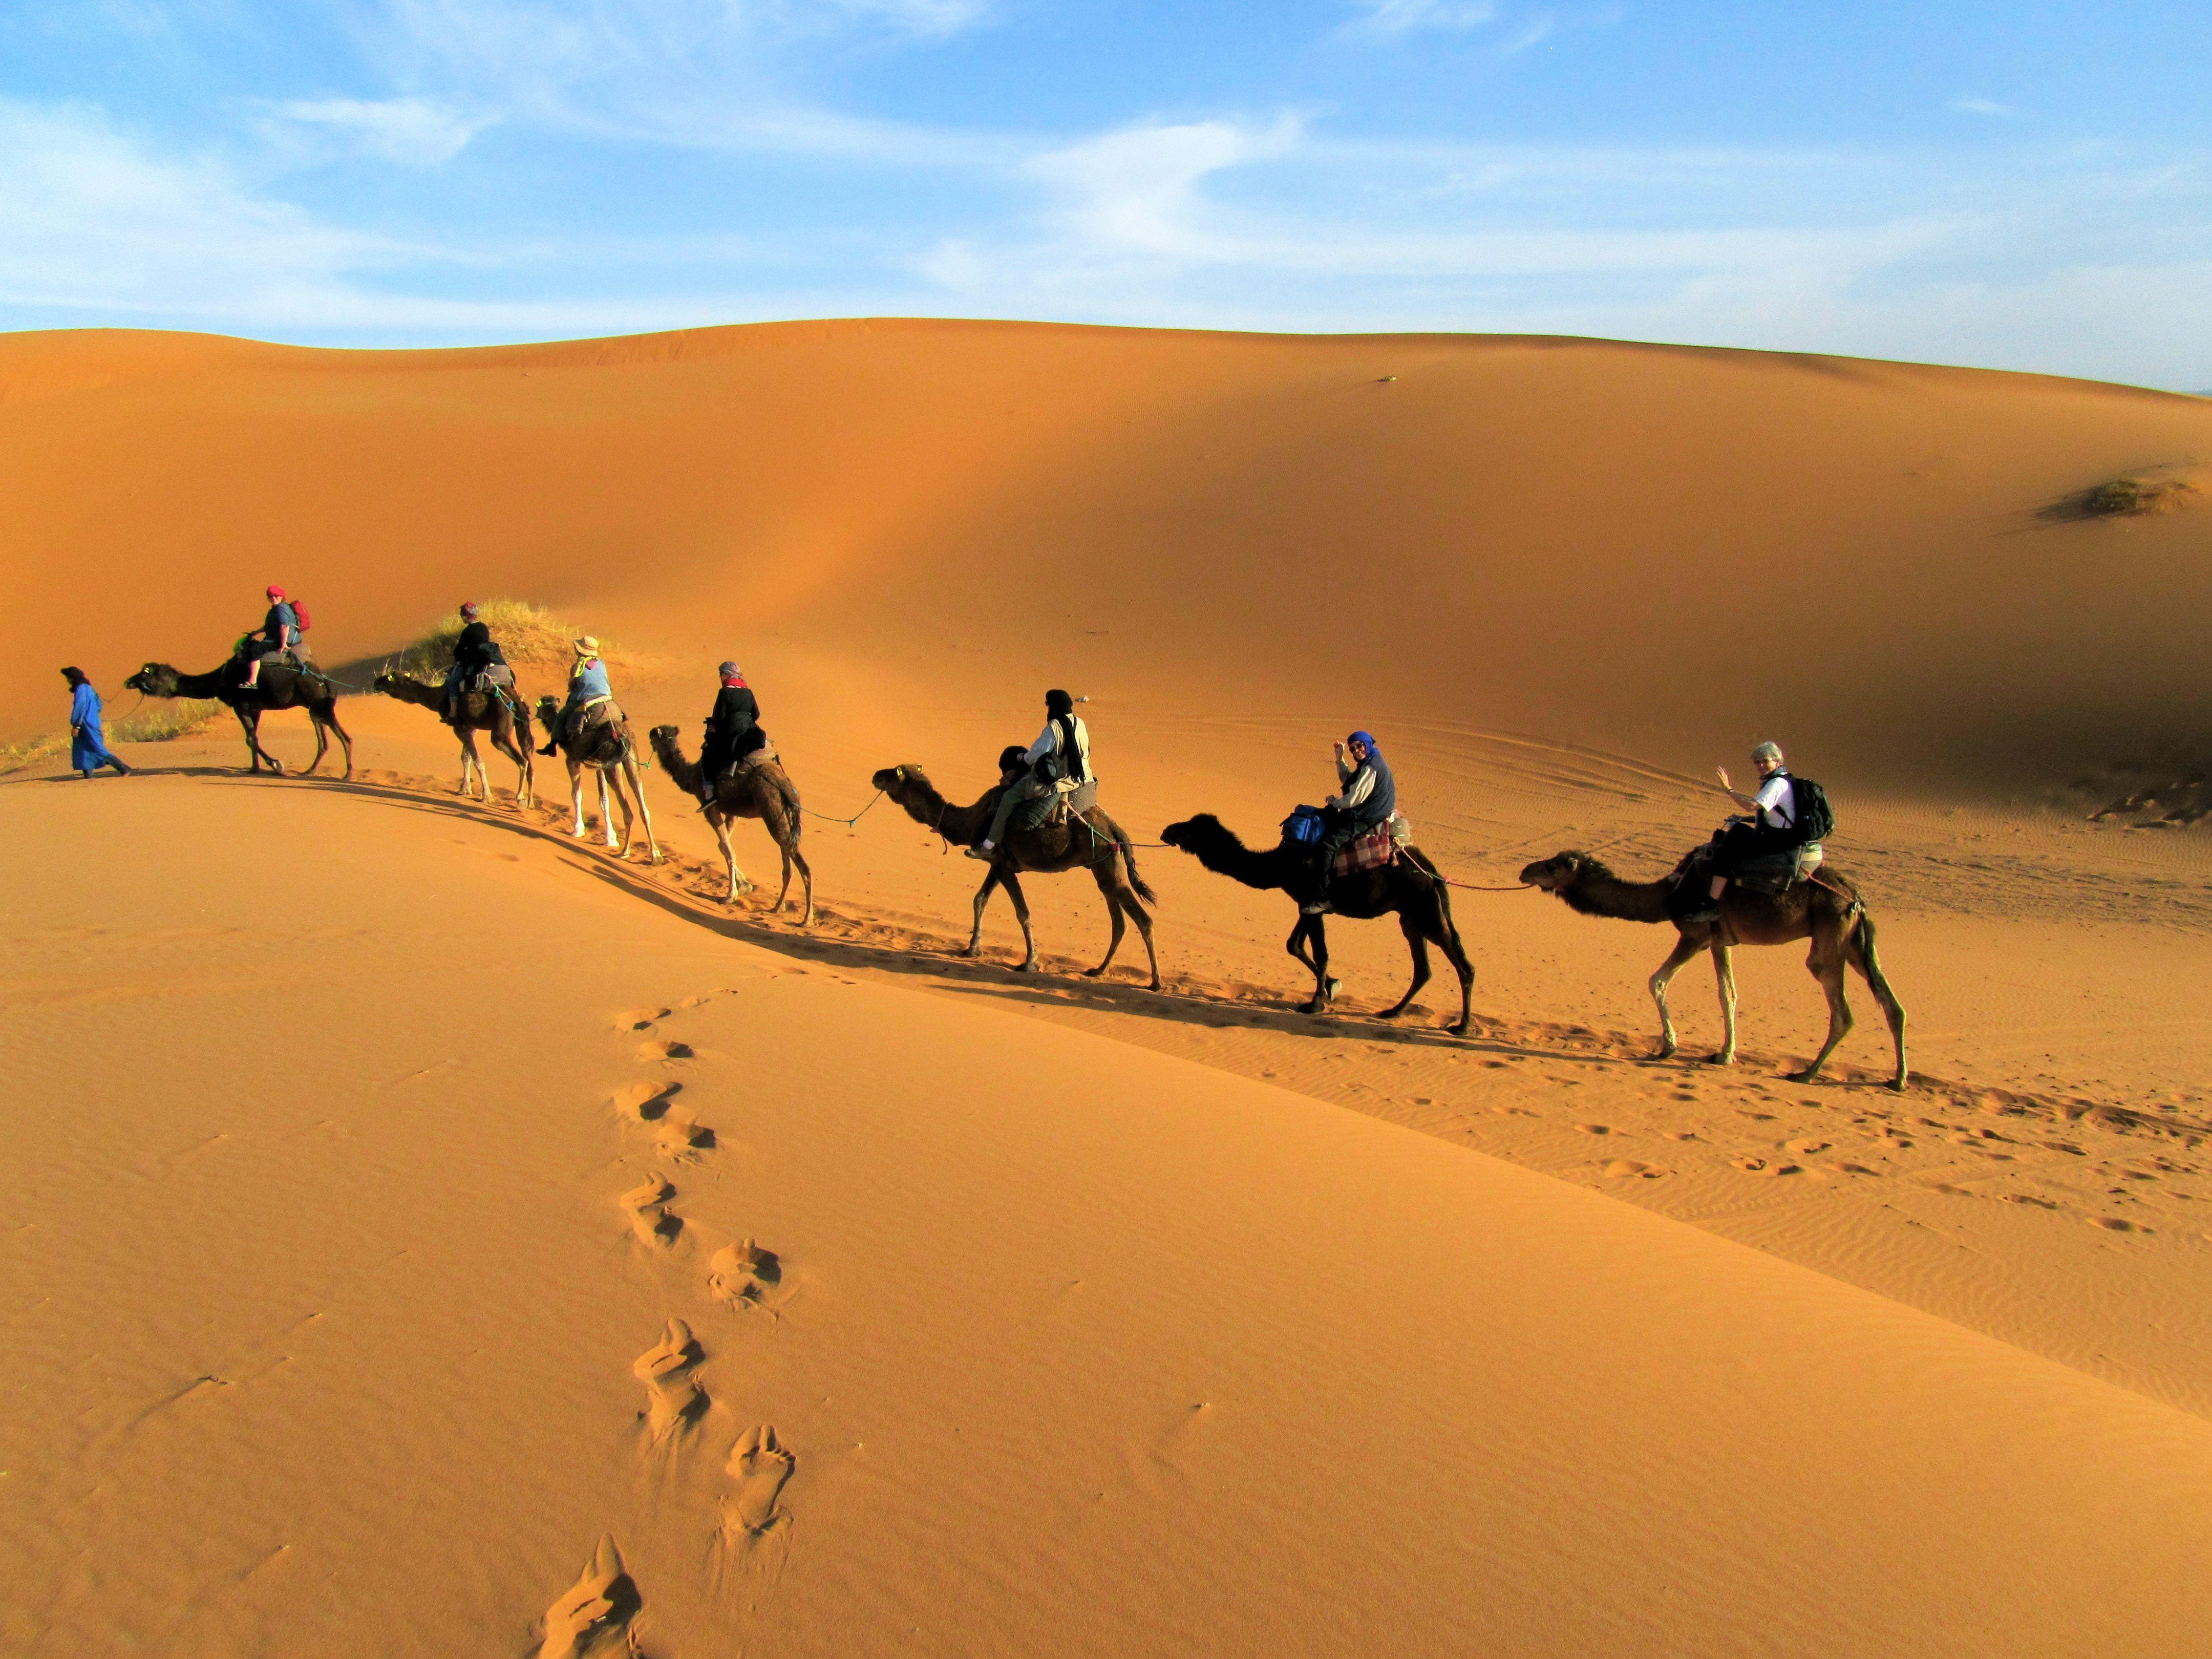 Desert Camel Wallpapers - Top Free Desert Camel Backgrounds